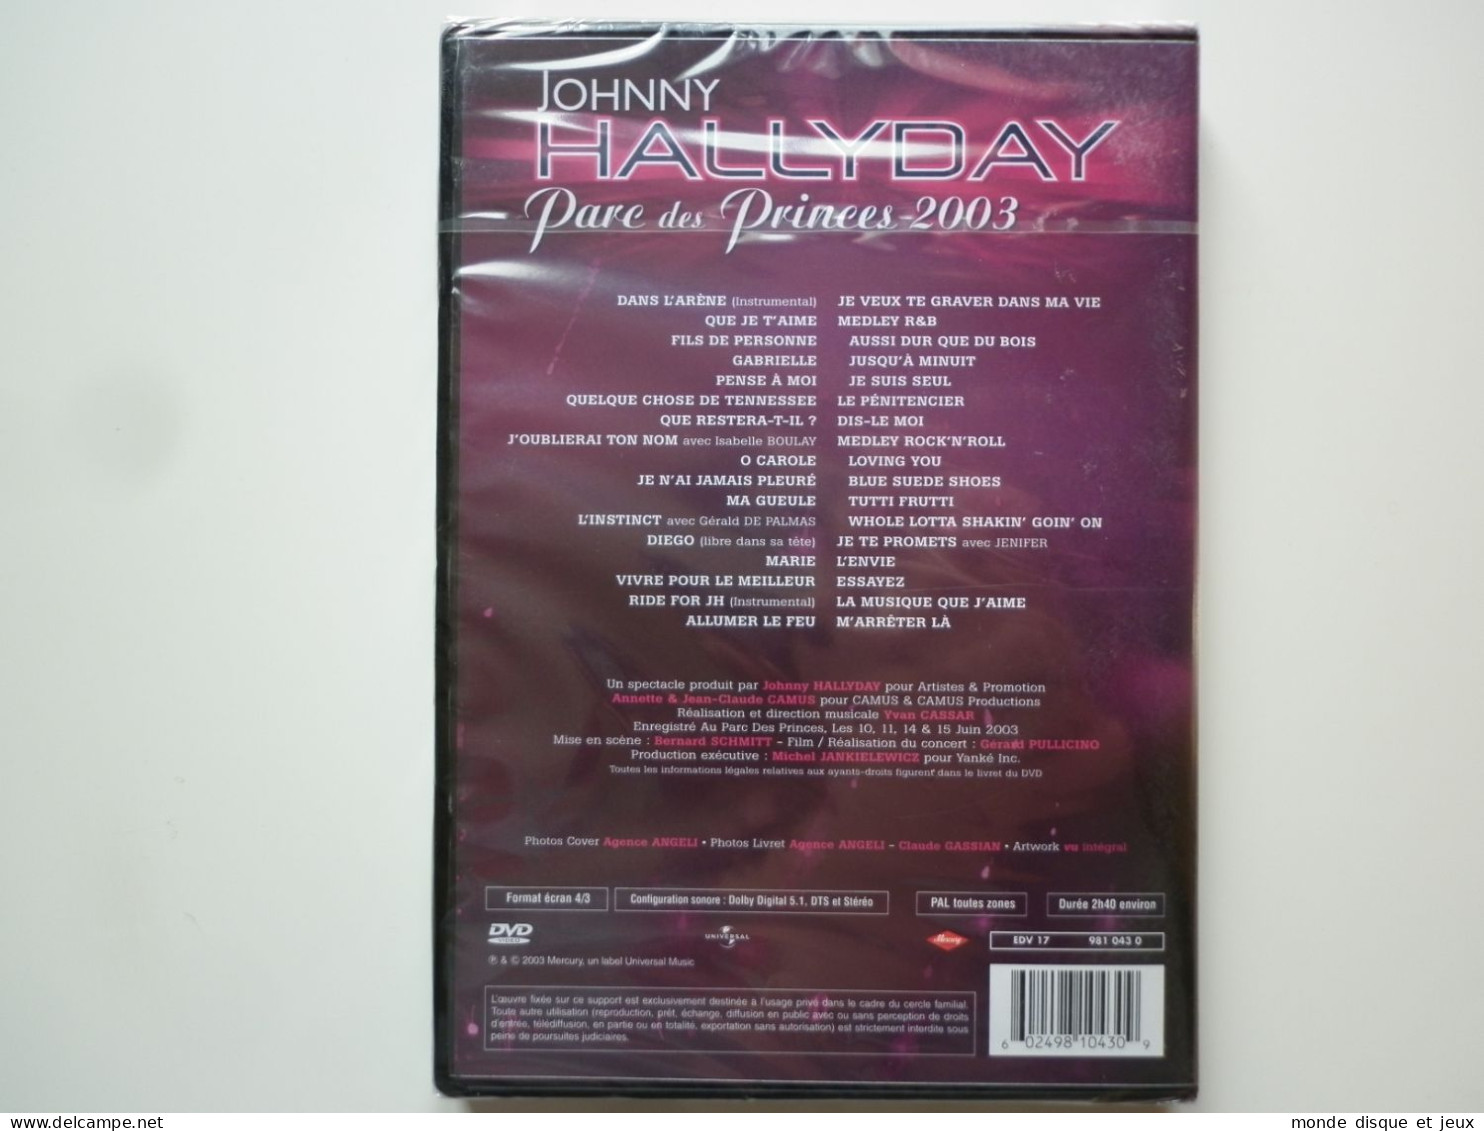 Johnny Hallyday Dvd Parc Des Princes 2003 - Music On DVD